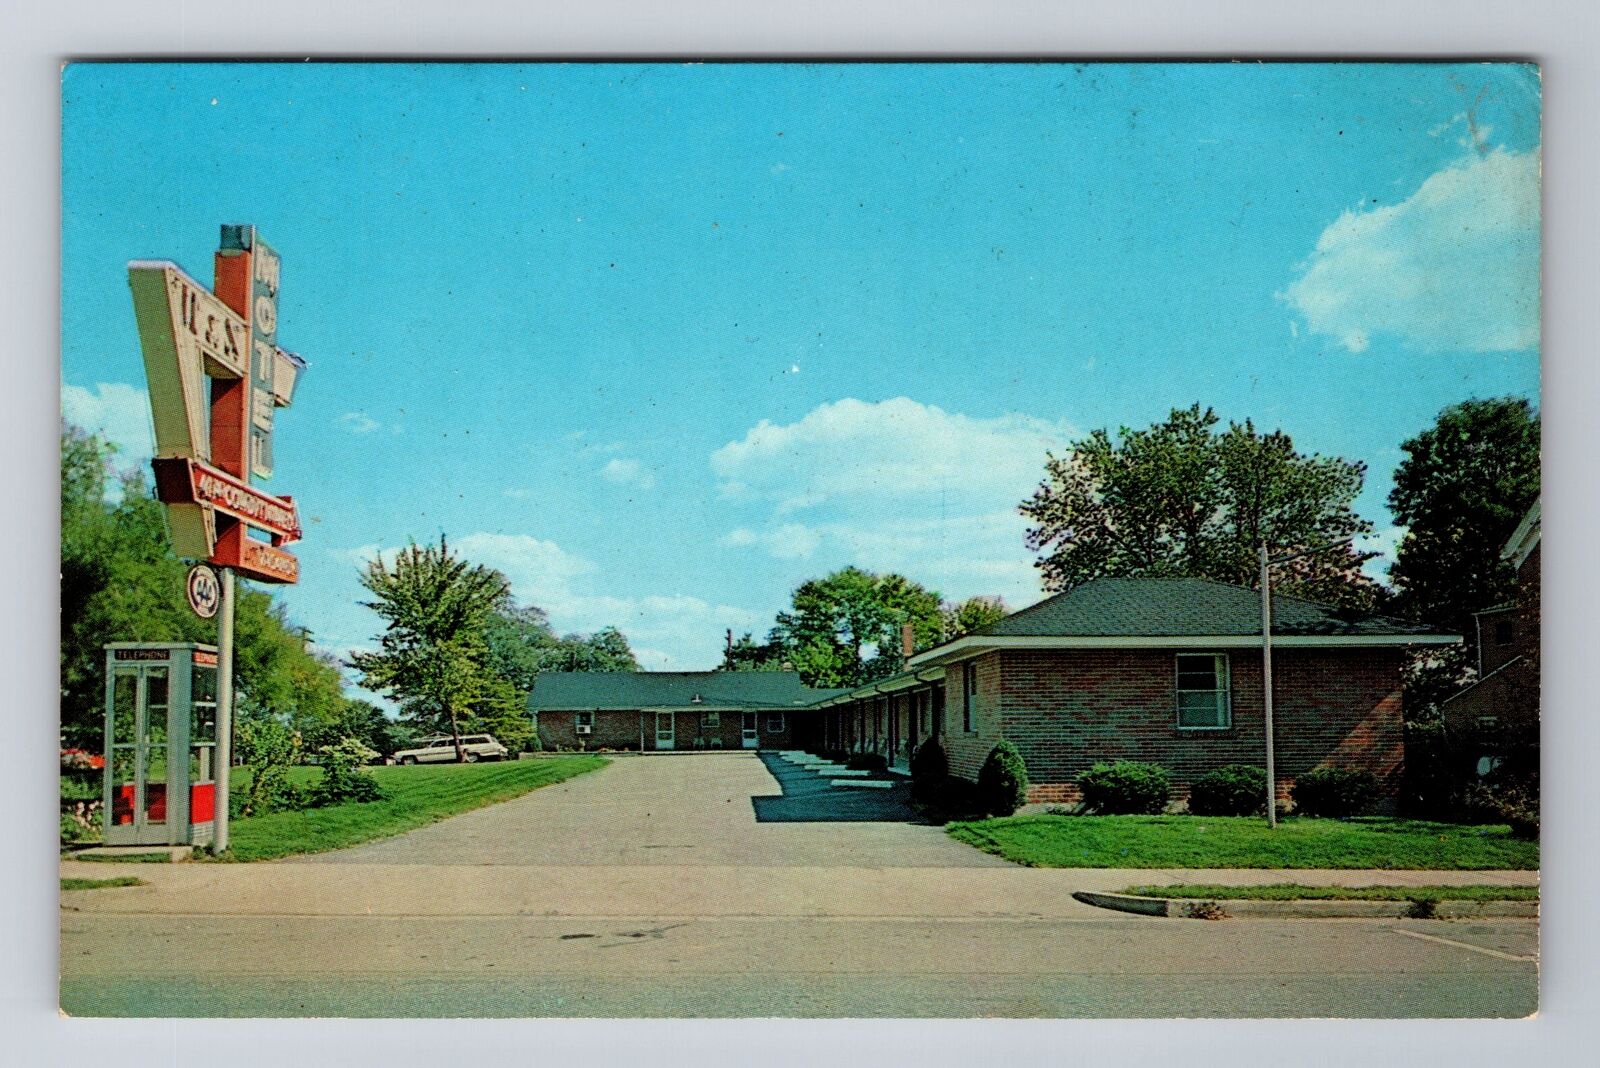 Paris, KY-Kentucky, R&S Motel, U.S. 68, c1960 Phonebooth, Vintage Postcard